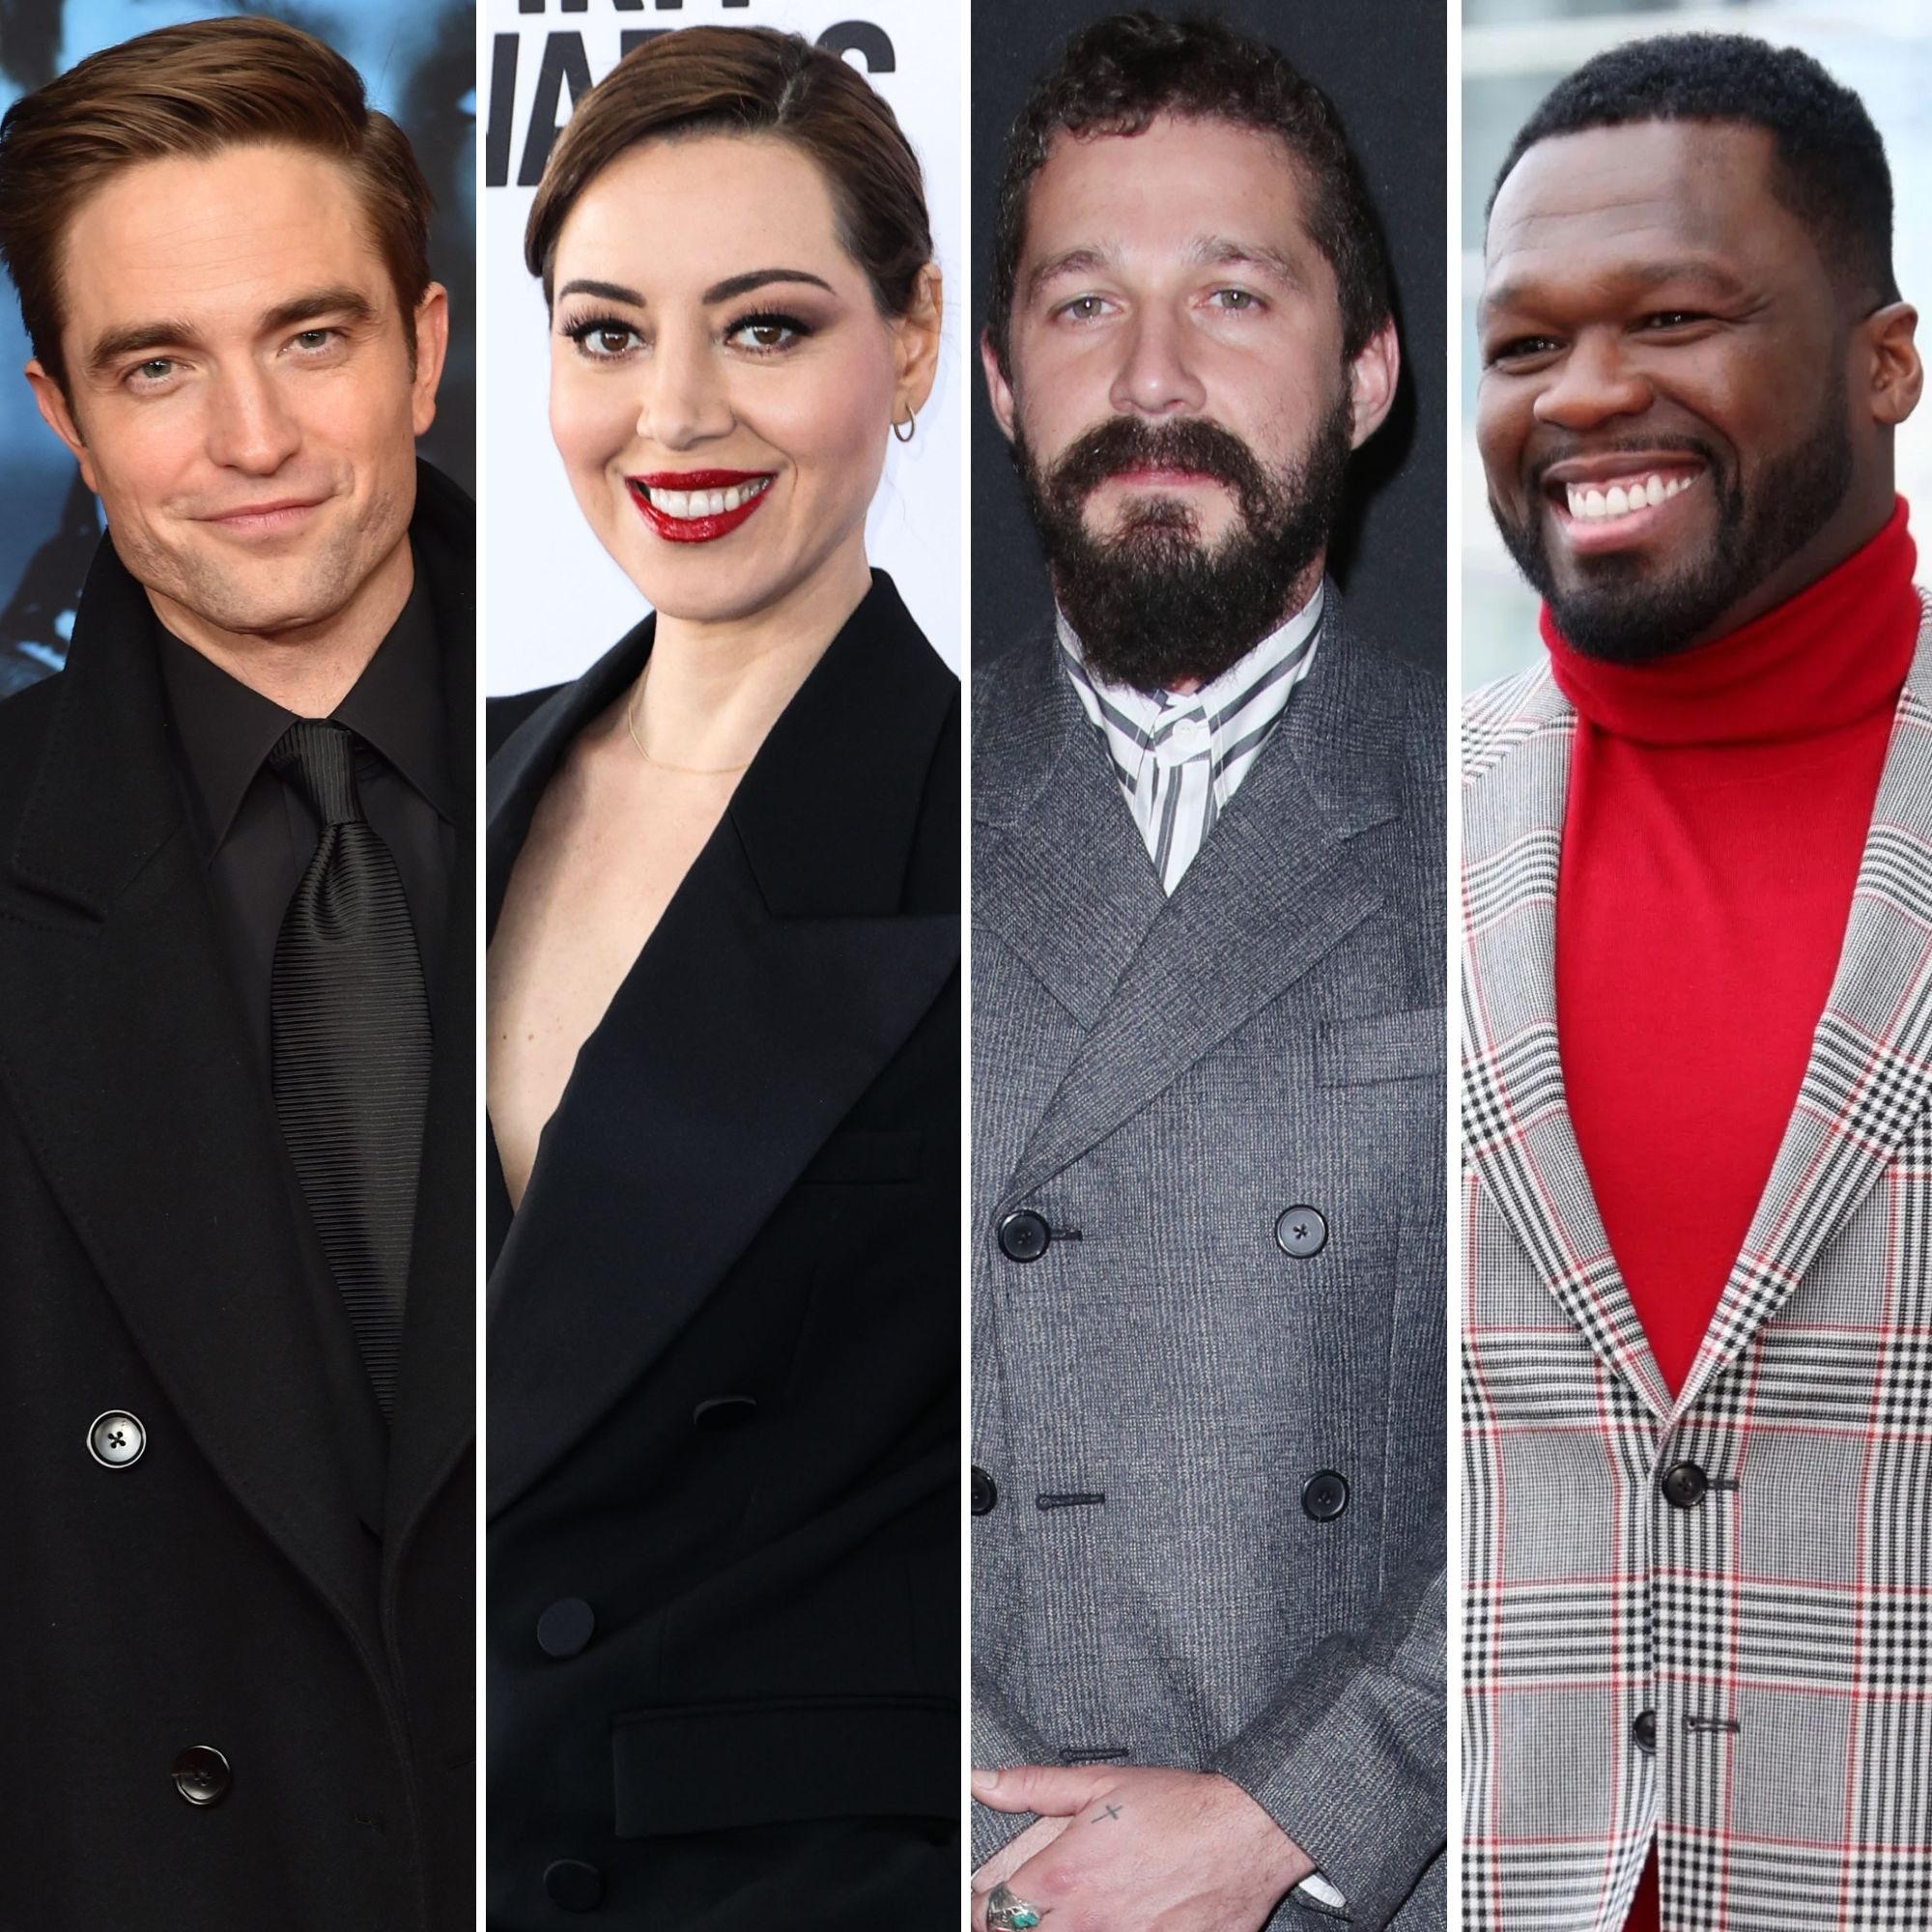 Celebrities Who Had Sex on Screen 50 Cent, Robert Pattinson image image